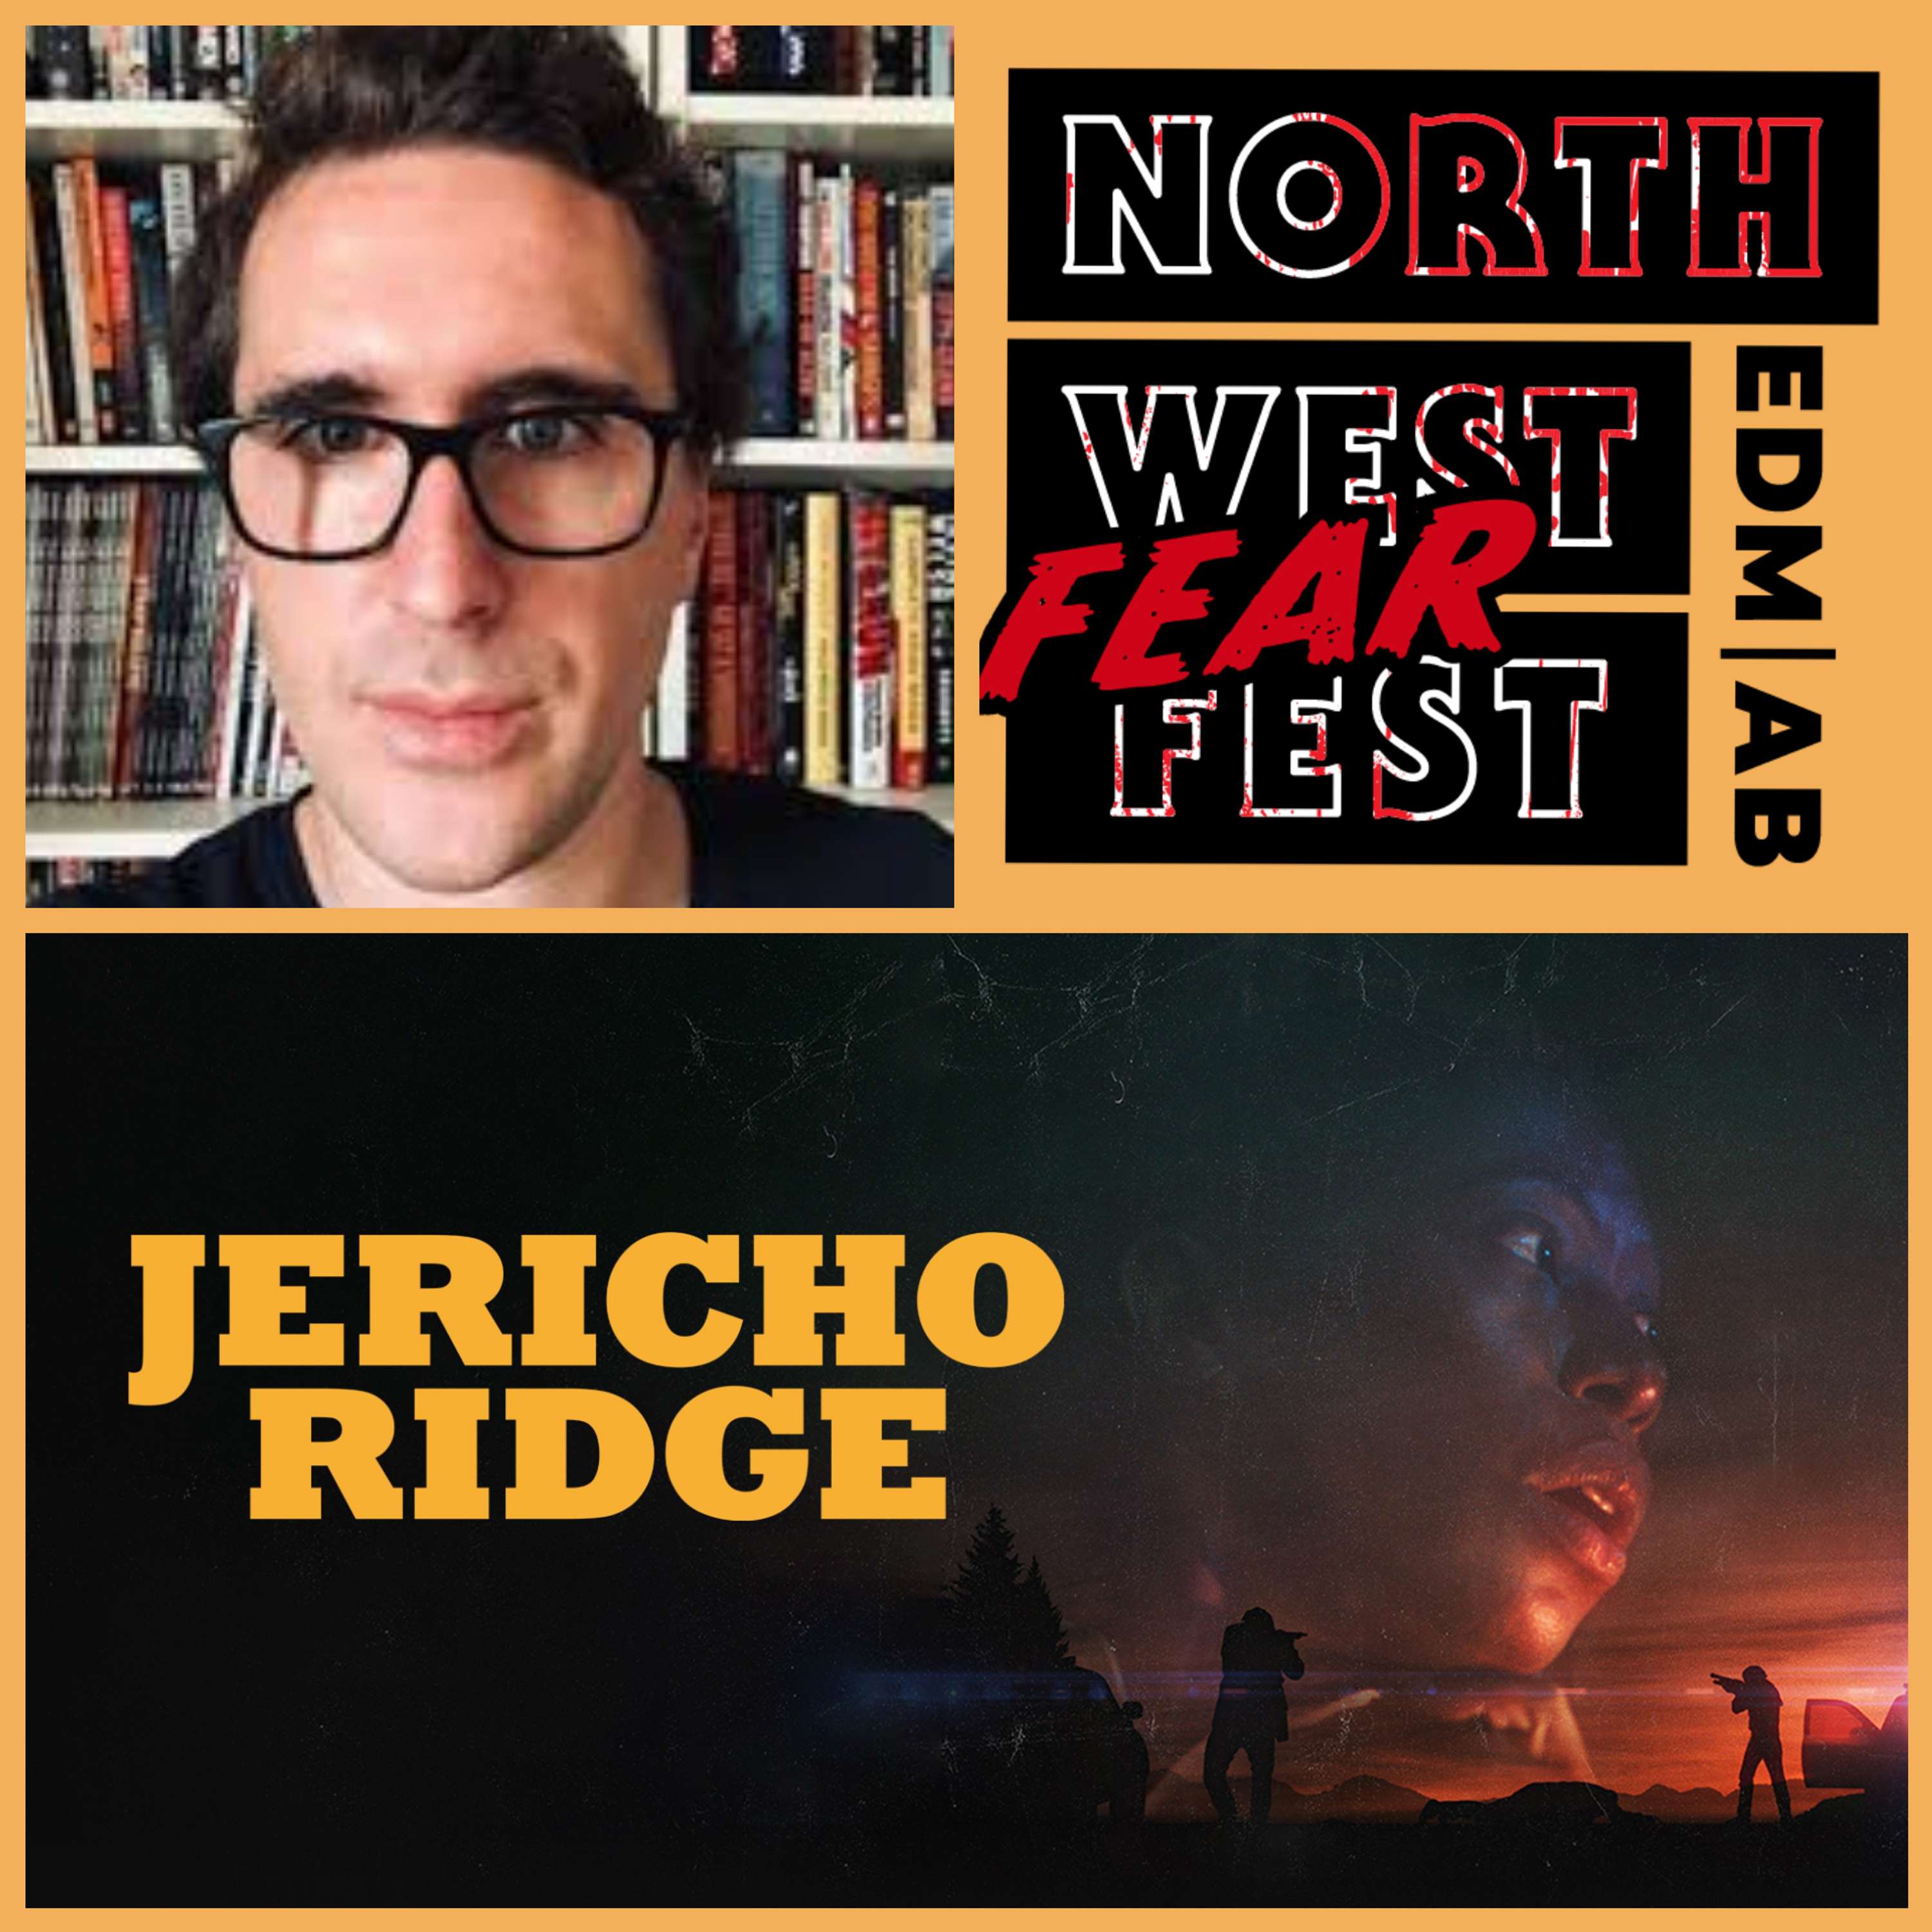 JERICHO RIDGE - Will Gilby (writer/director) - NWFF 2023